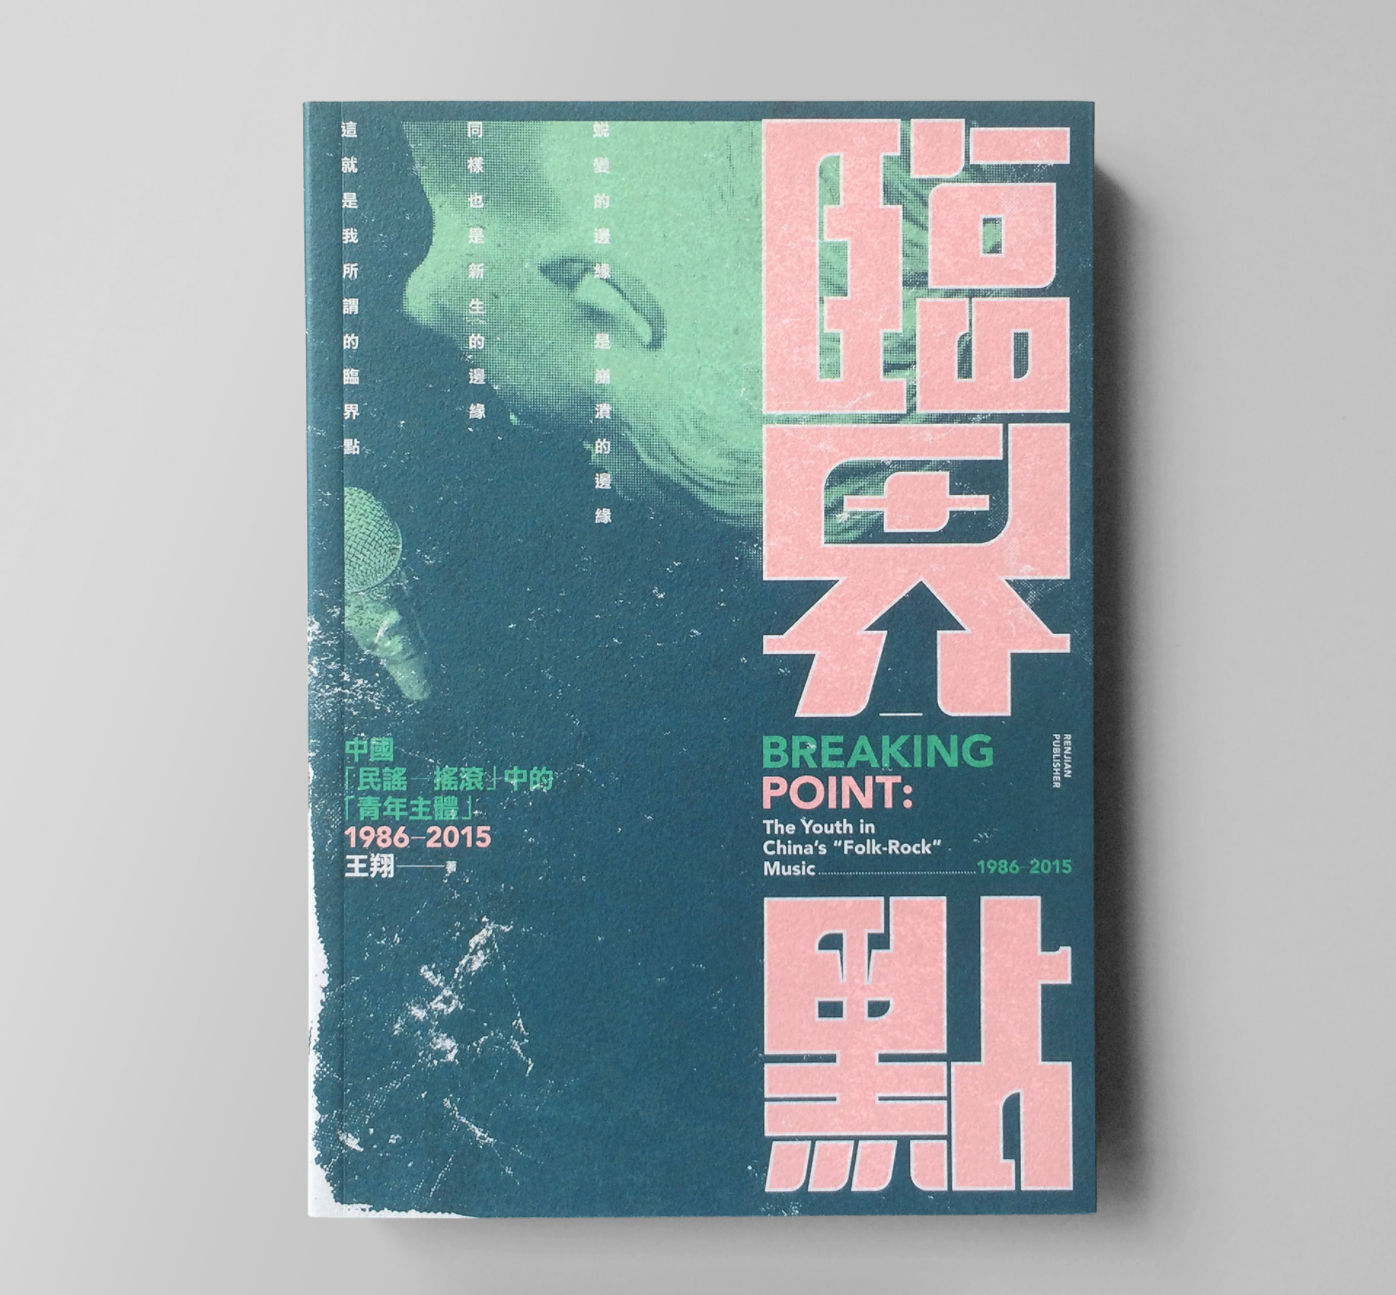 Book cover grunge design